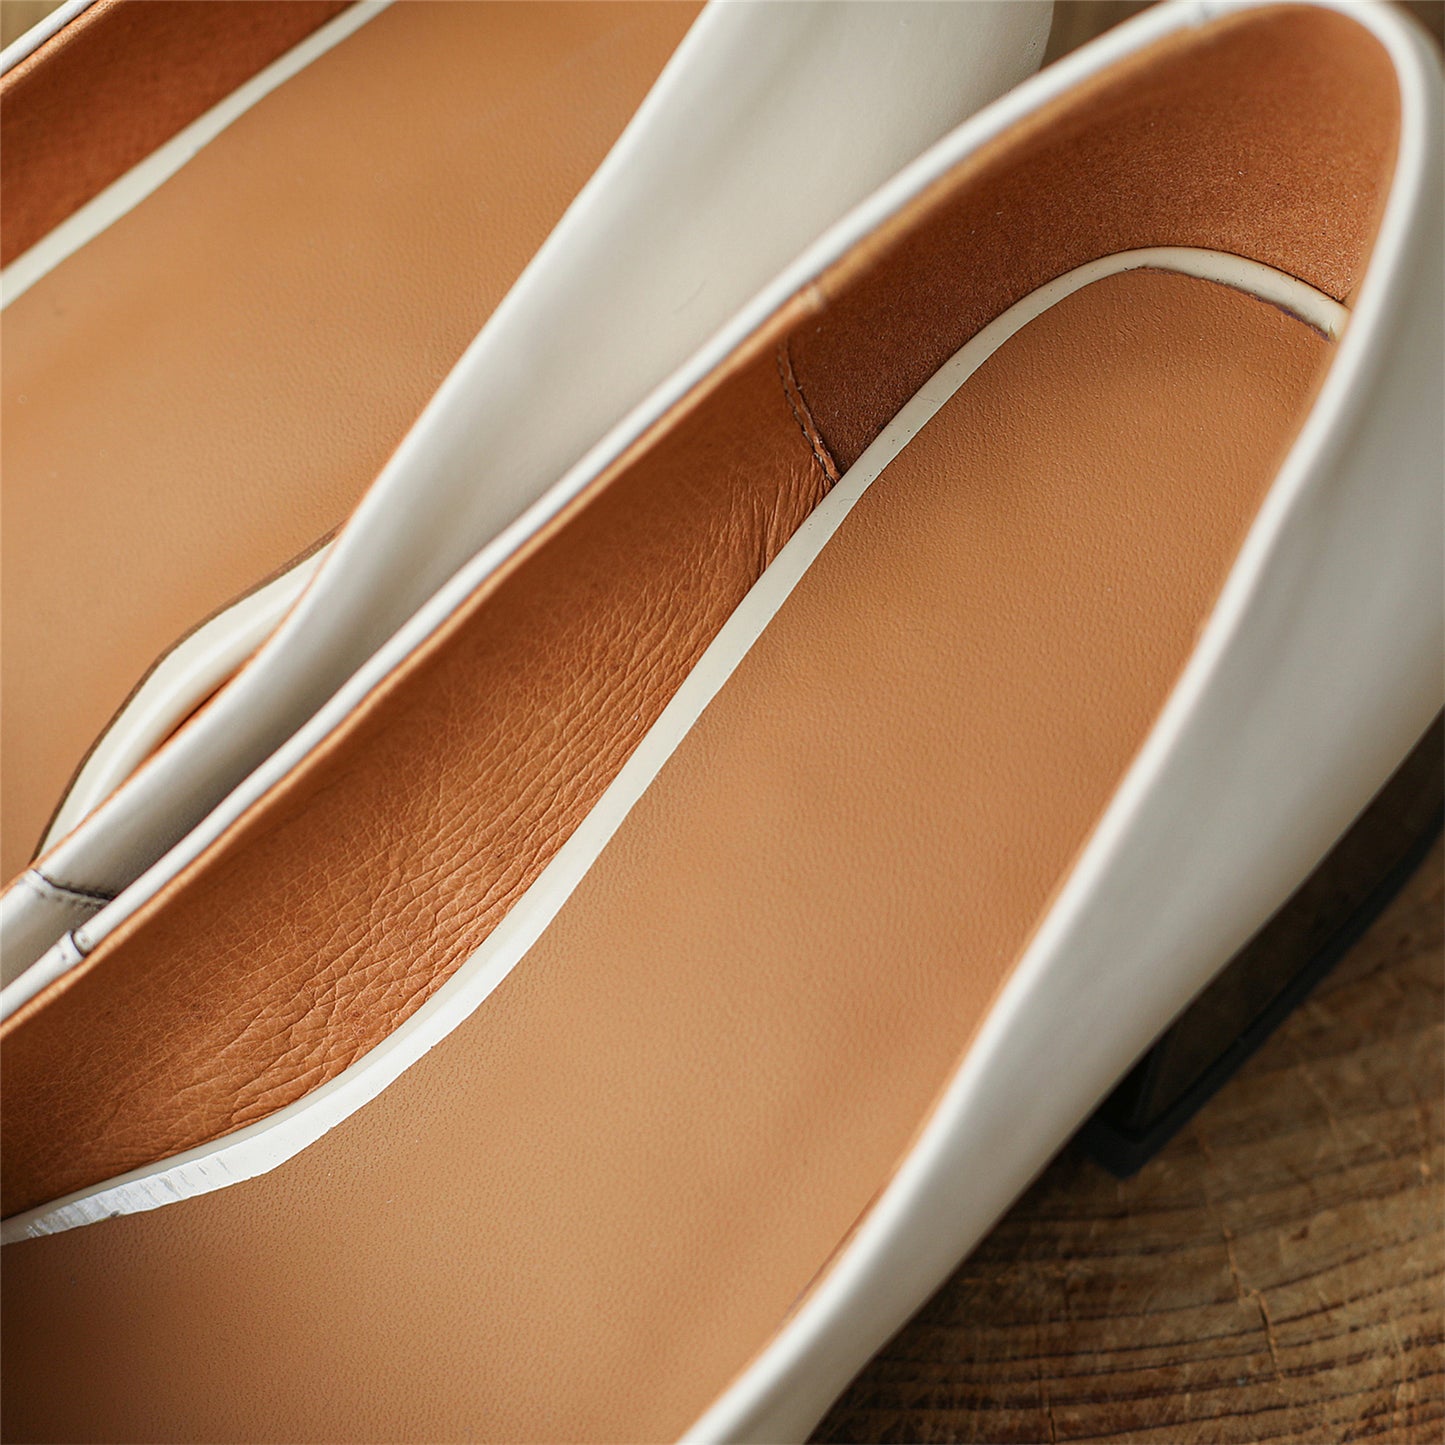 TinaCus Women's Assorted Colors Handmade Genuine Leather Chunky Heel Slip On Pumps